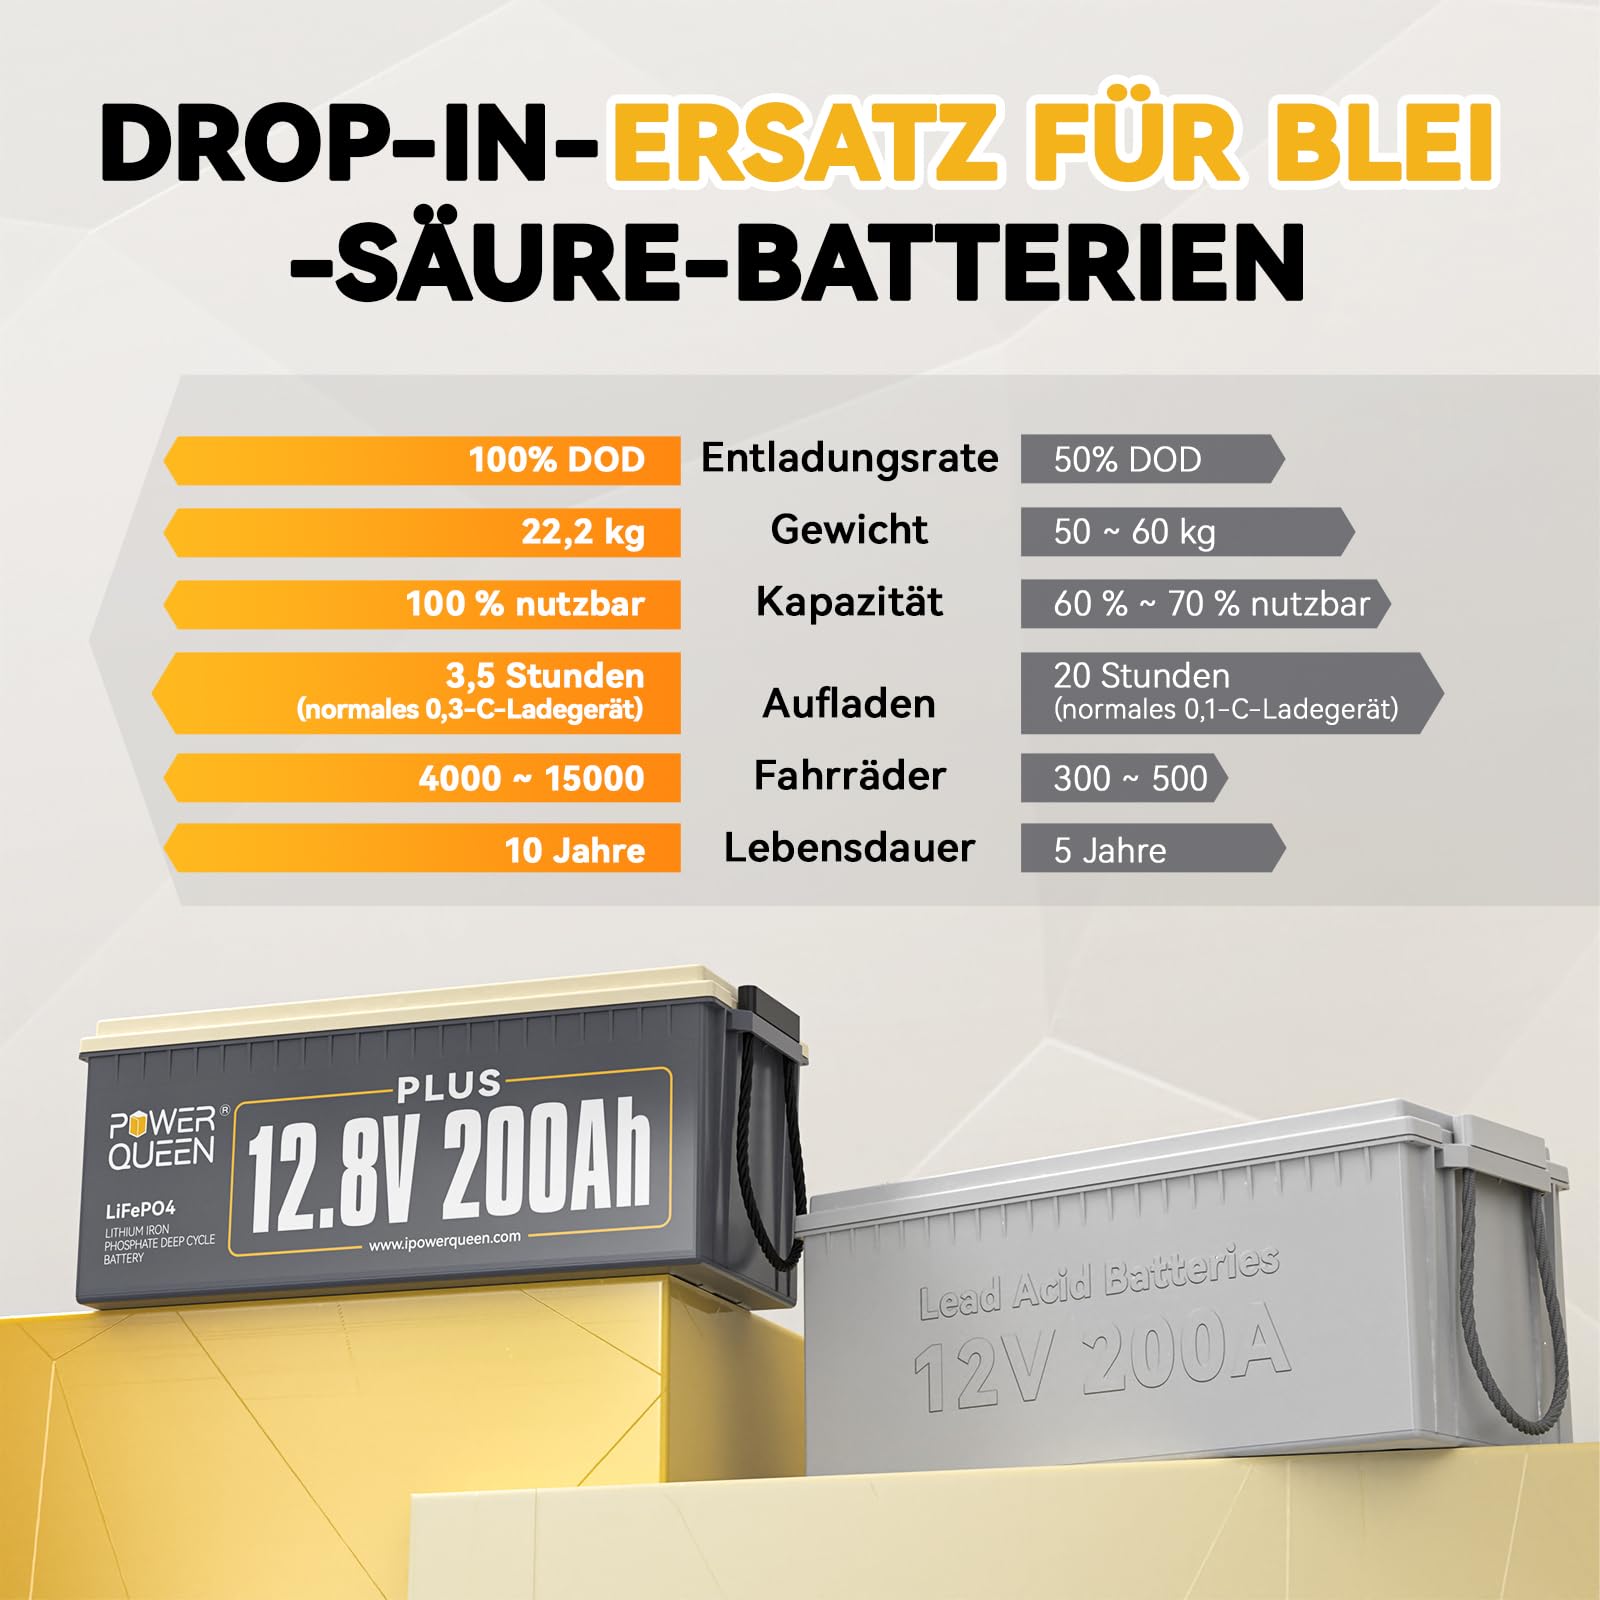 【0% VAT】Power Queen 12V 200Ah Plus LiFePO4 battery, built-in 200A BMS